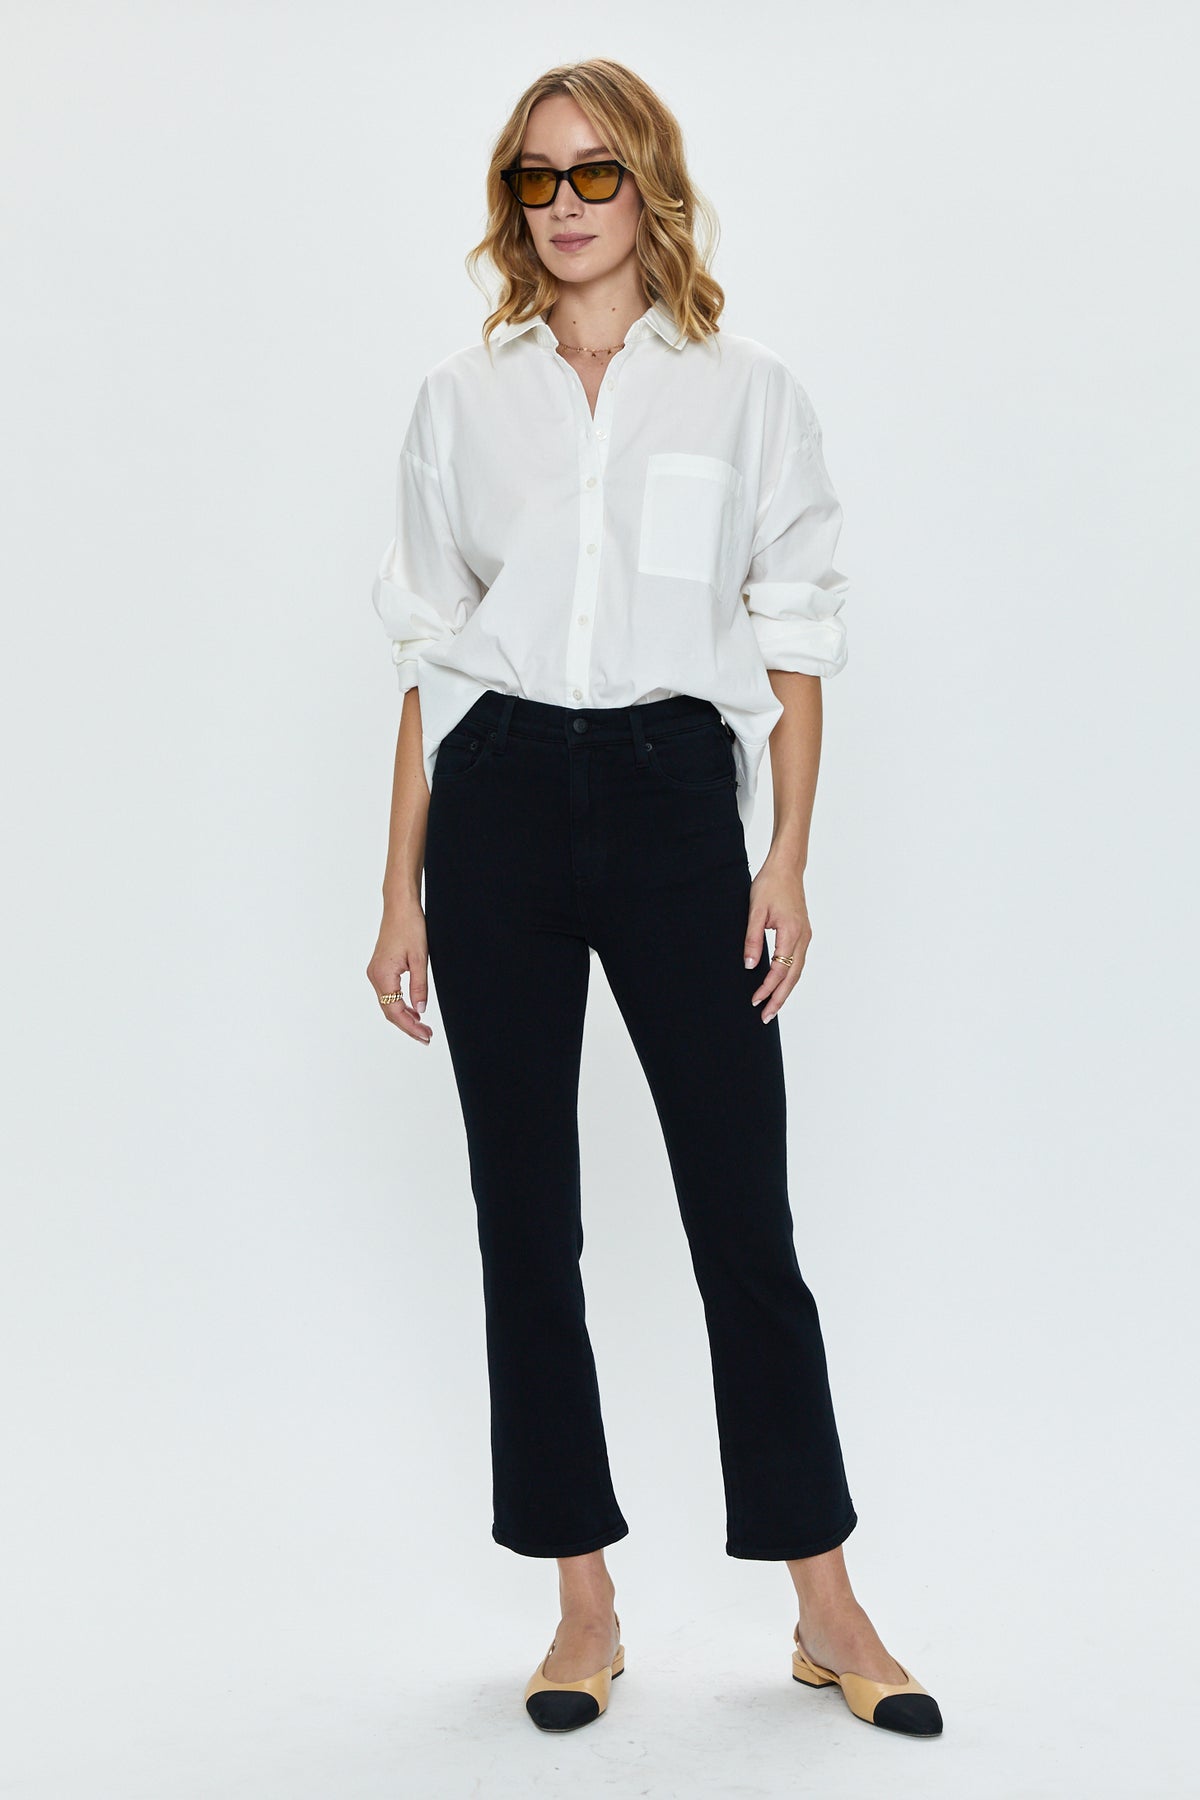 Sloane Long Sleeve Oversized Button Down Shirt - Le Blanc